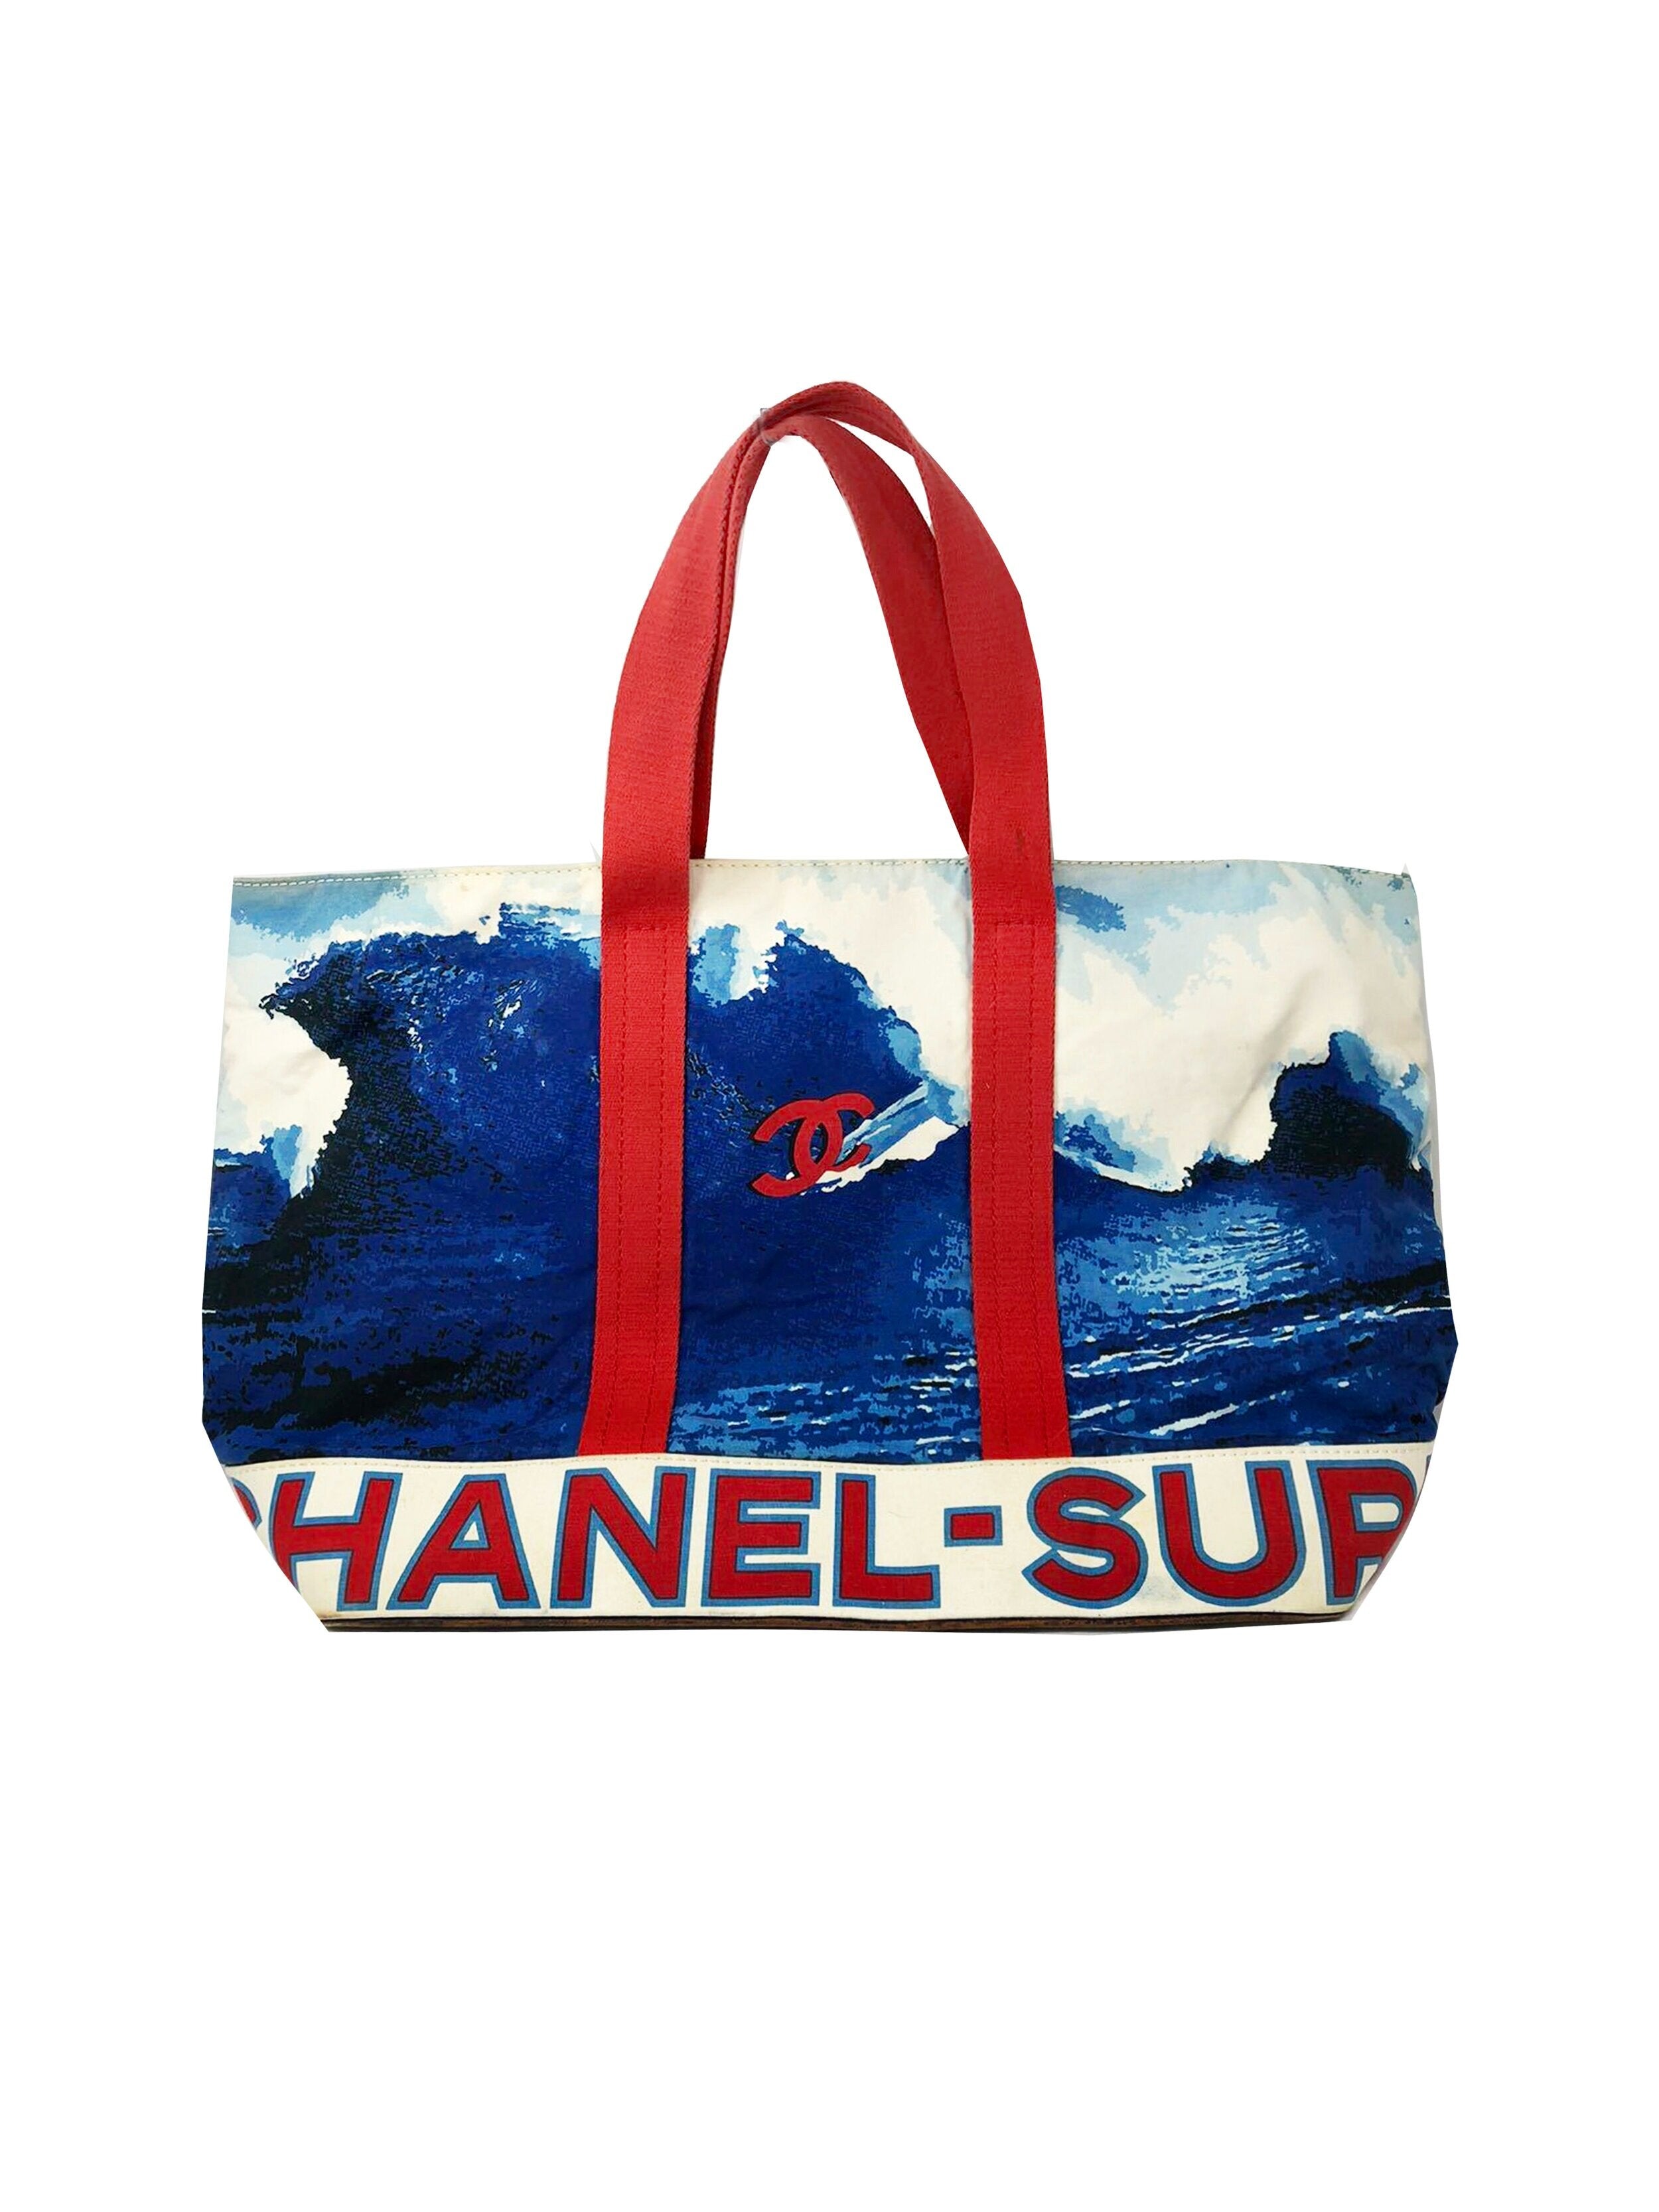 CHANEL, Bags, Chanel Surfbag